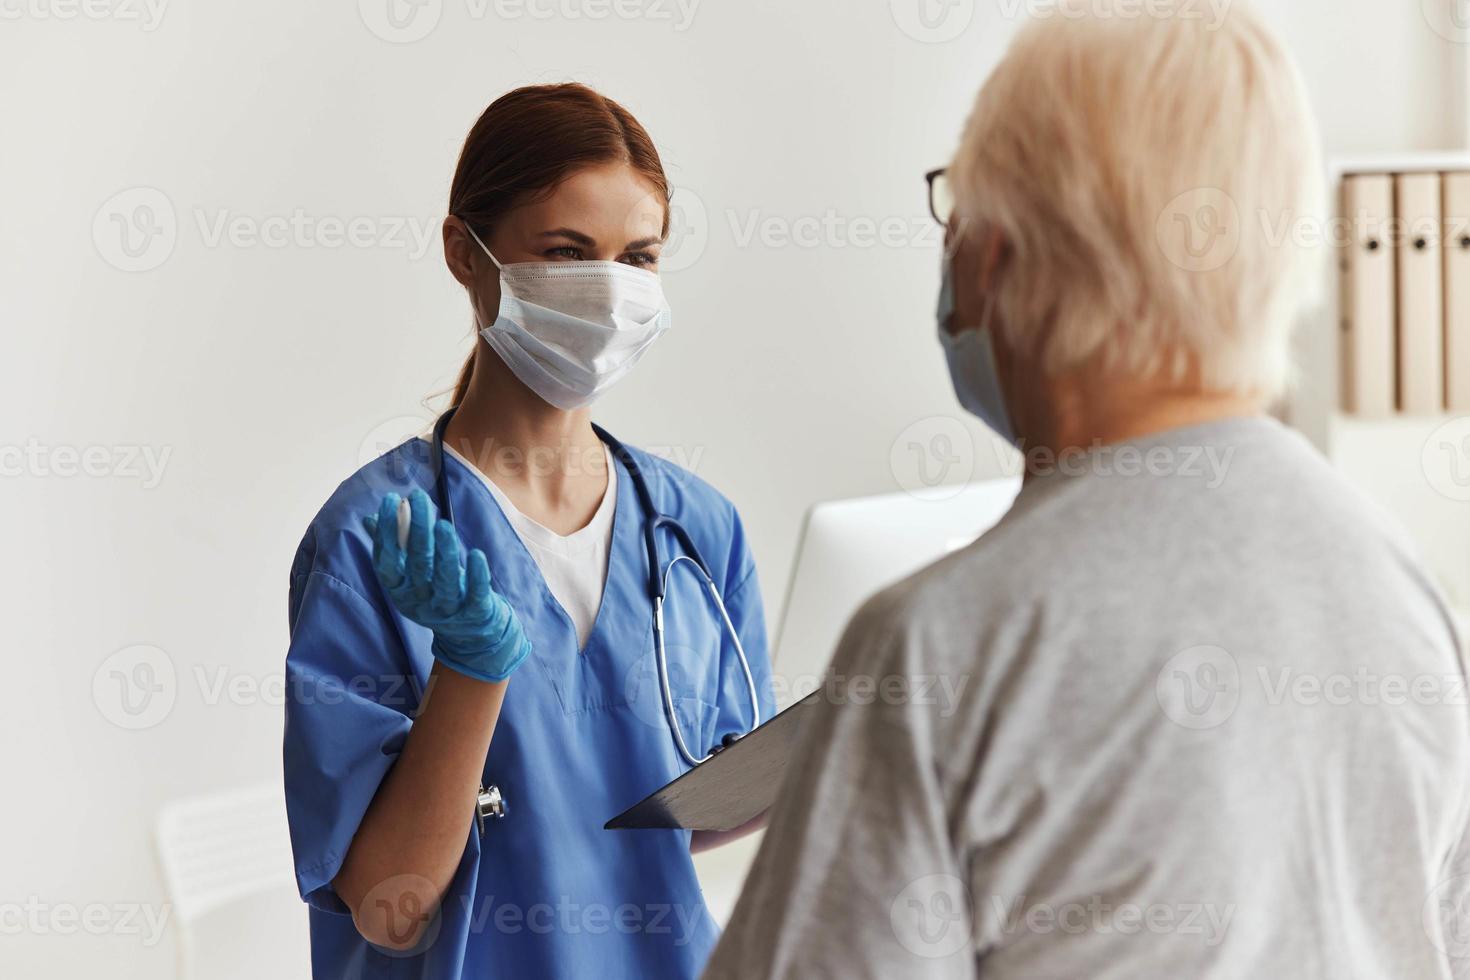 nurse and patient discussion treatment photo